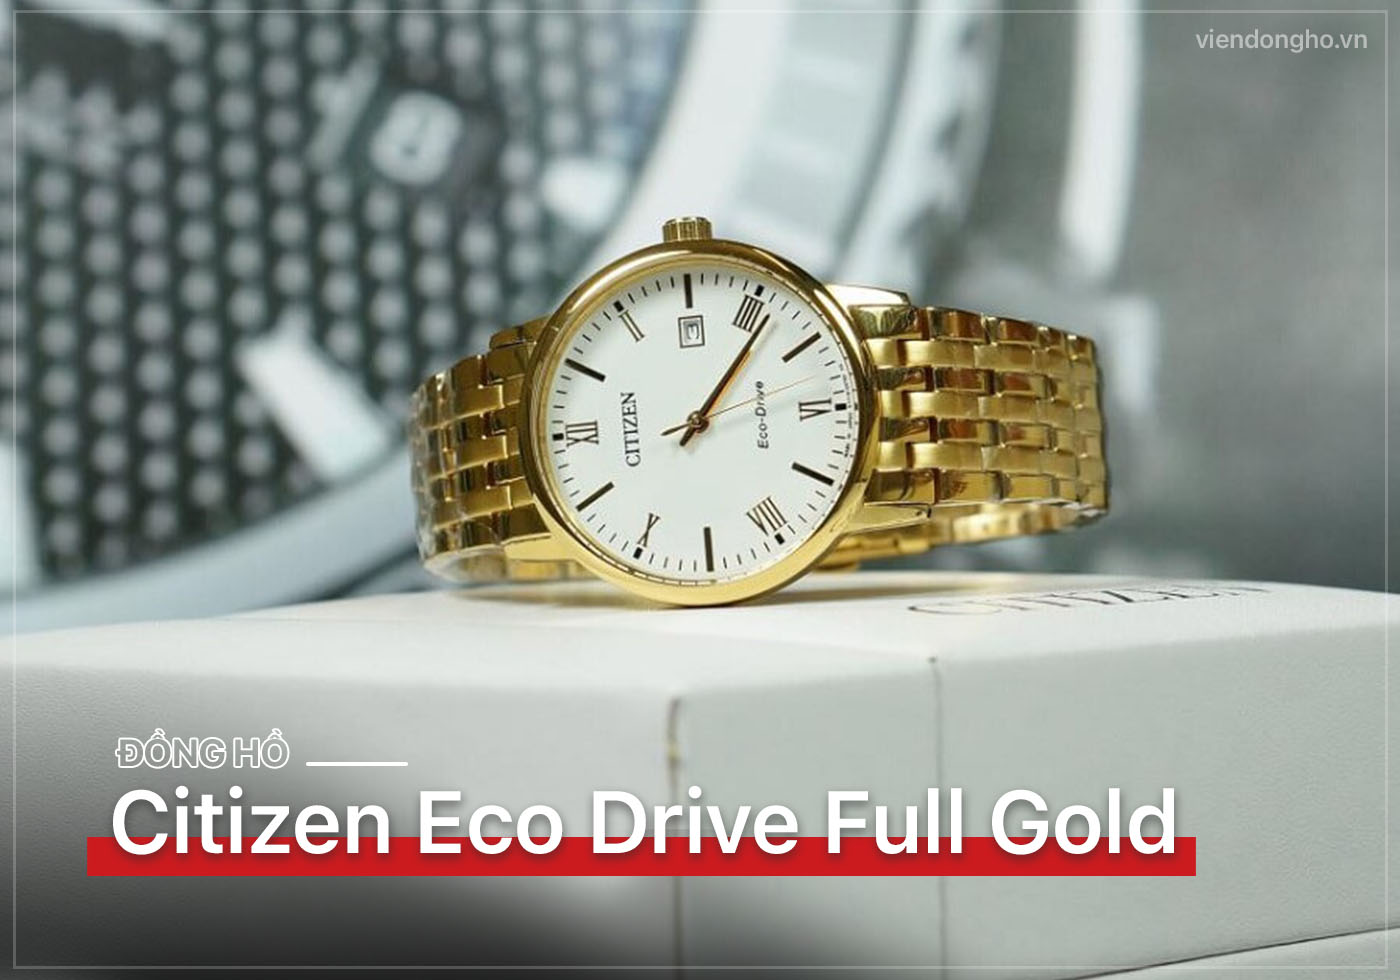 Su hap dan kho cuong cua dong ho Citizen Eco Drive Full Gold 1